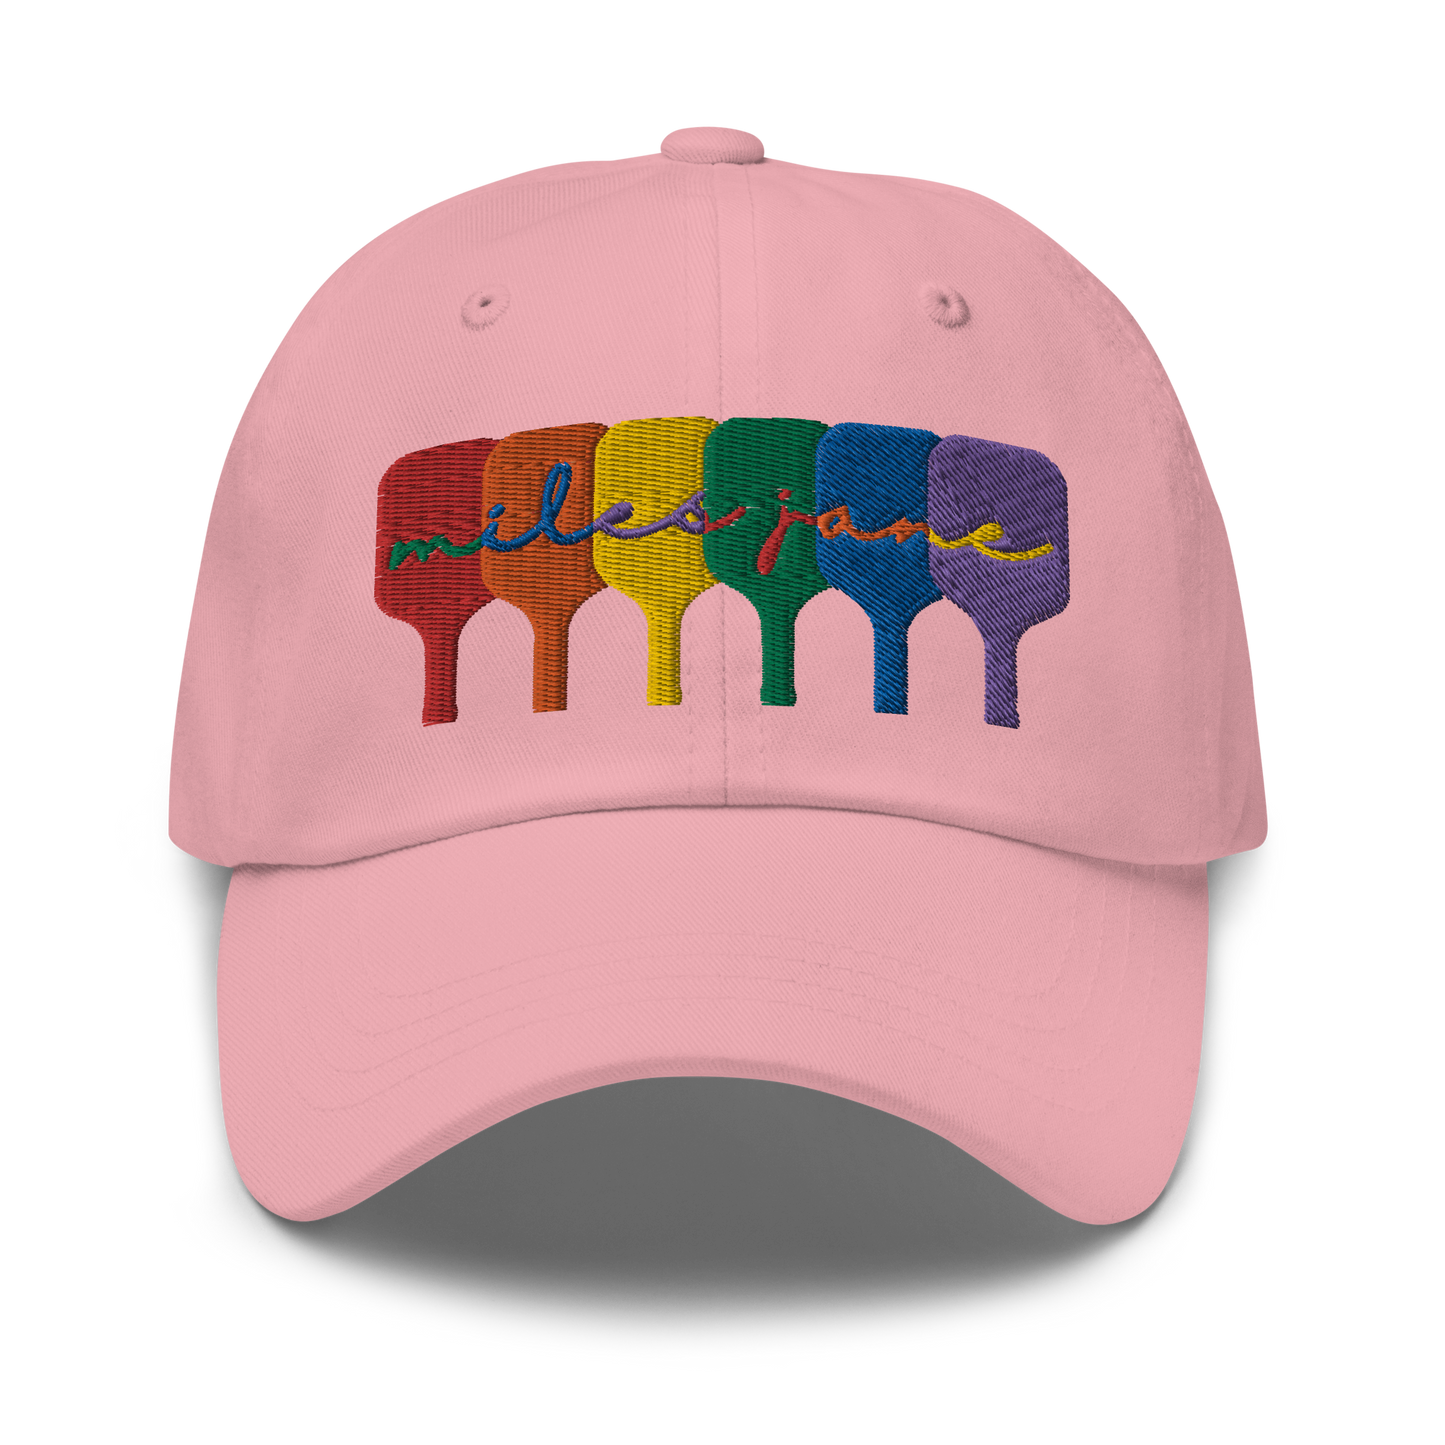 Pride Team Paddles - The Classics Hat - MJ1034